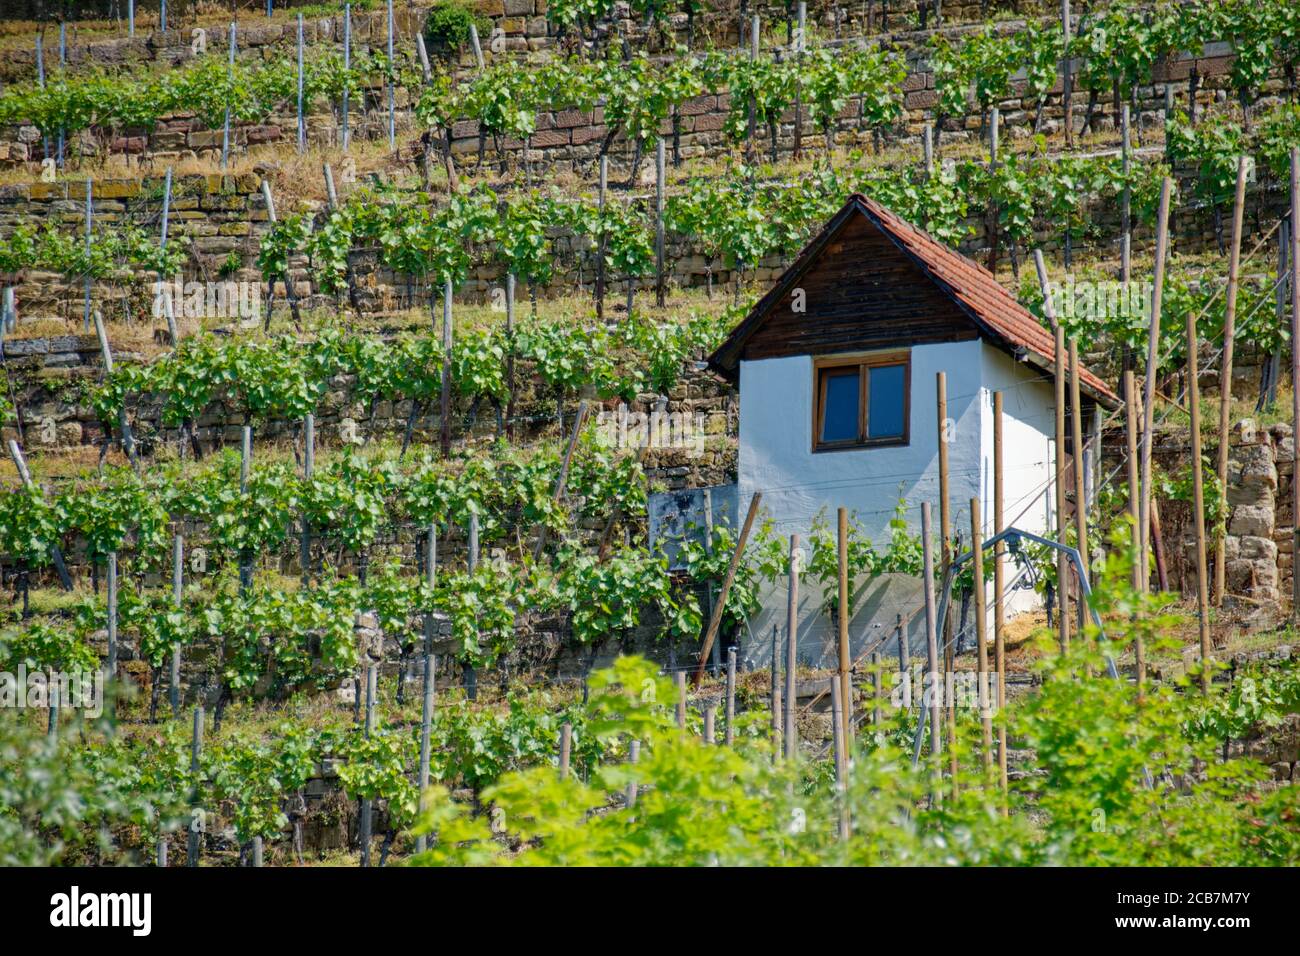 Stuttgart winegrowing Stock Photo